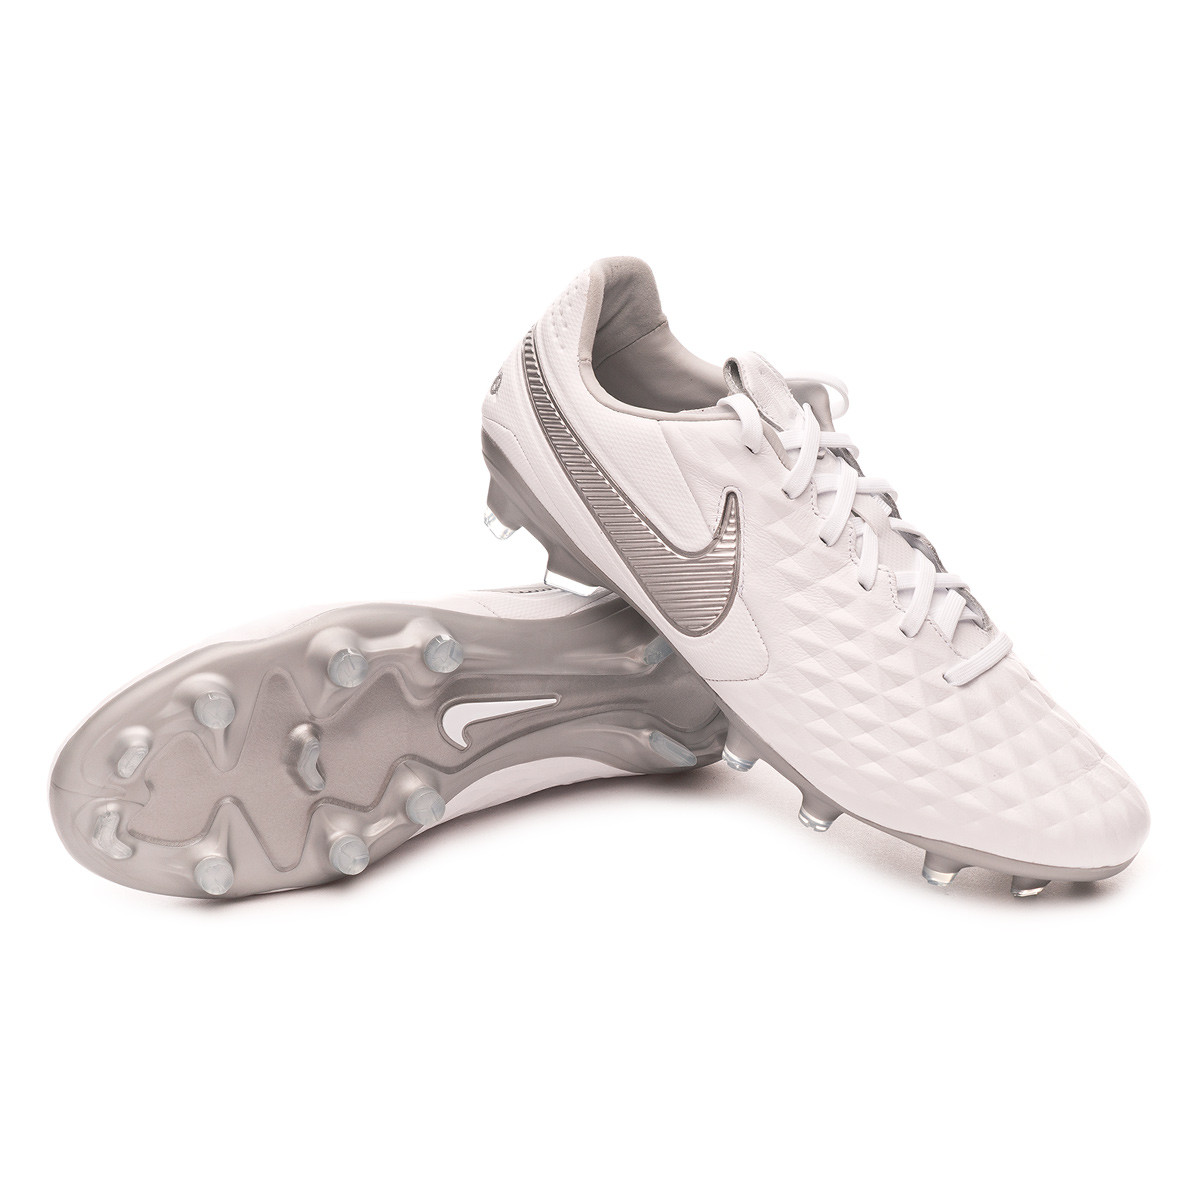 Football Boots Nike Tiempo Legend VIII Pro FG White-Chrome-Metallic silver  - Football store Fútbol Emotion